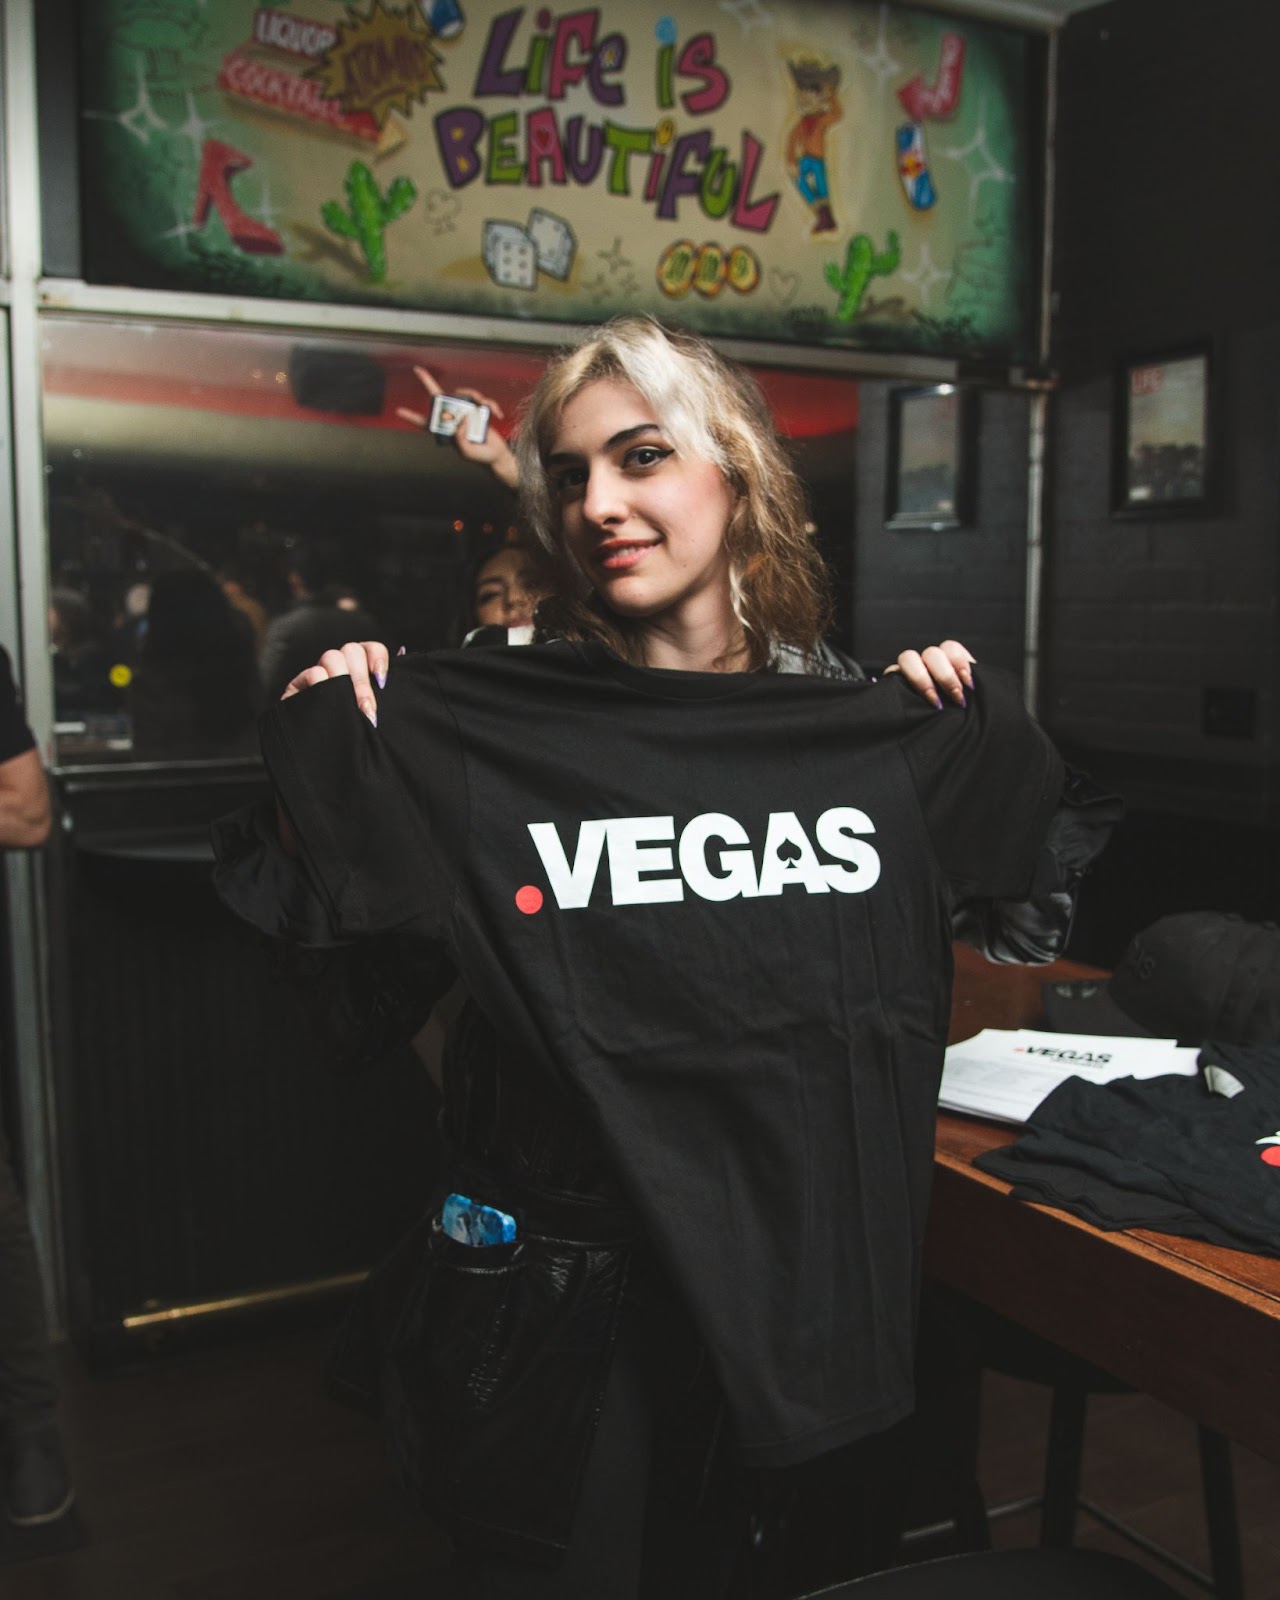 Local Las Vegas business professional receiving .Vegas t-shirt